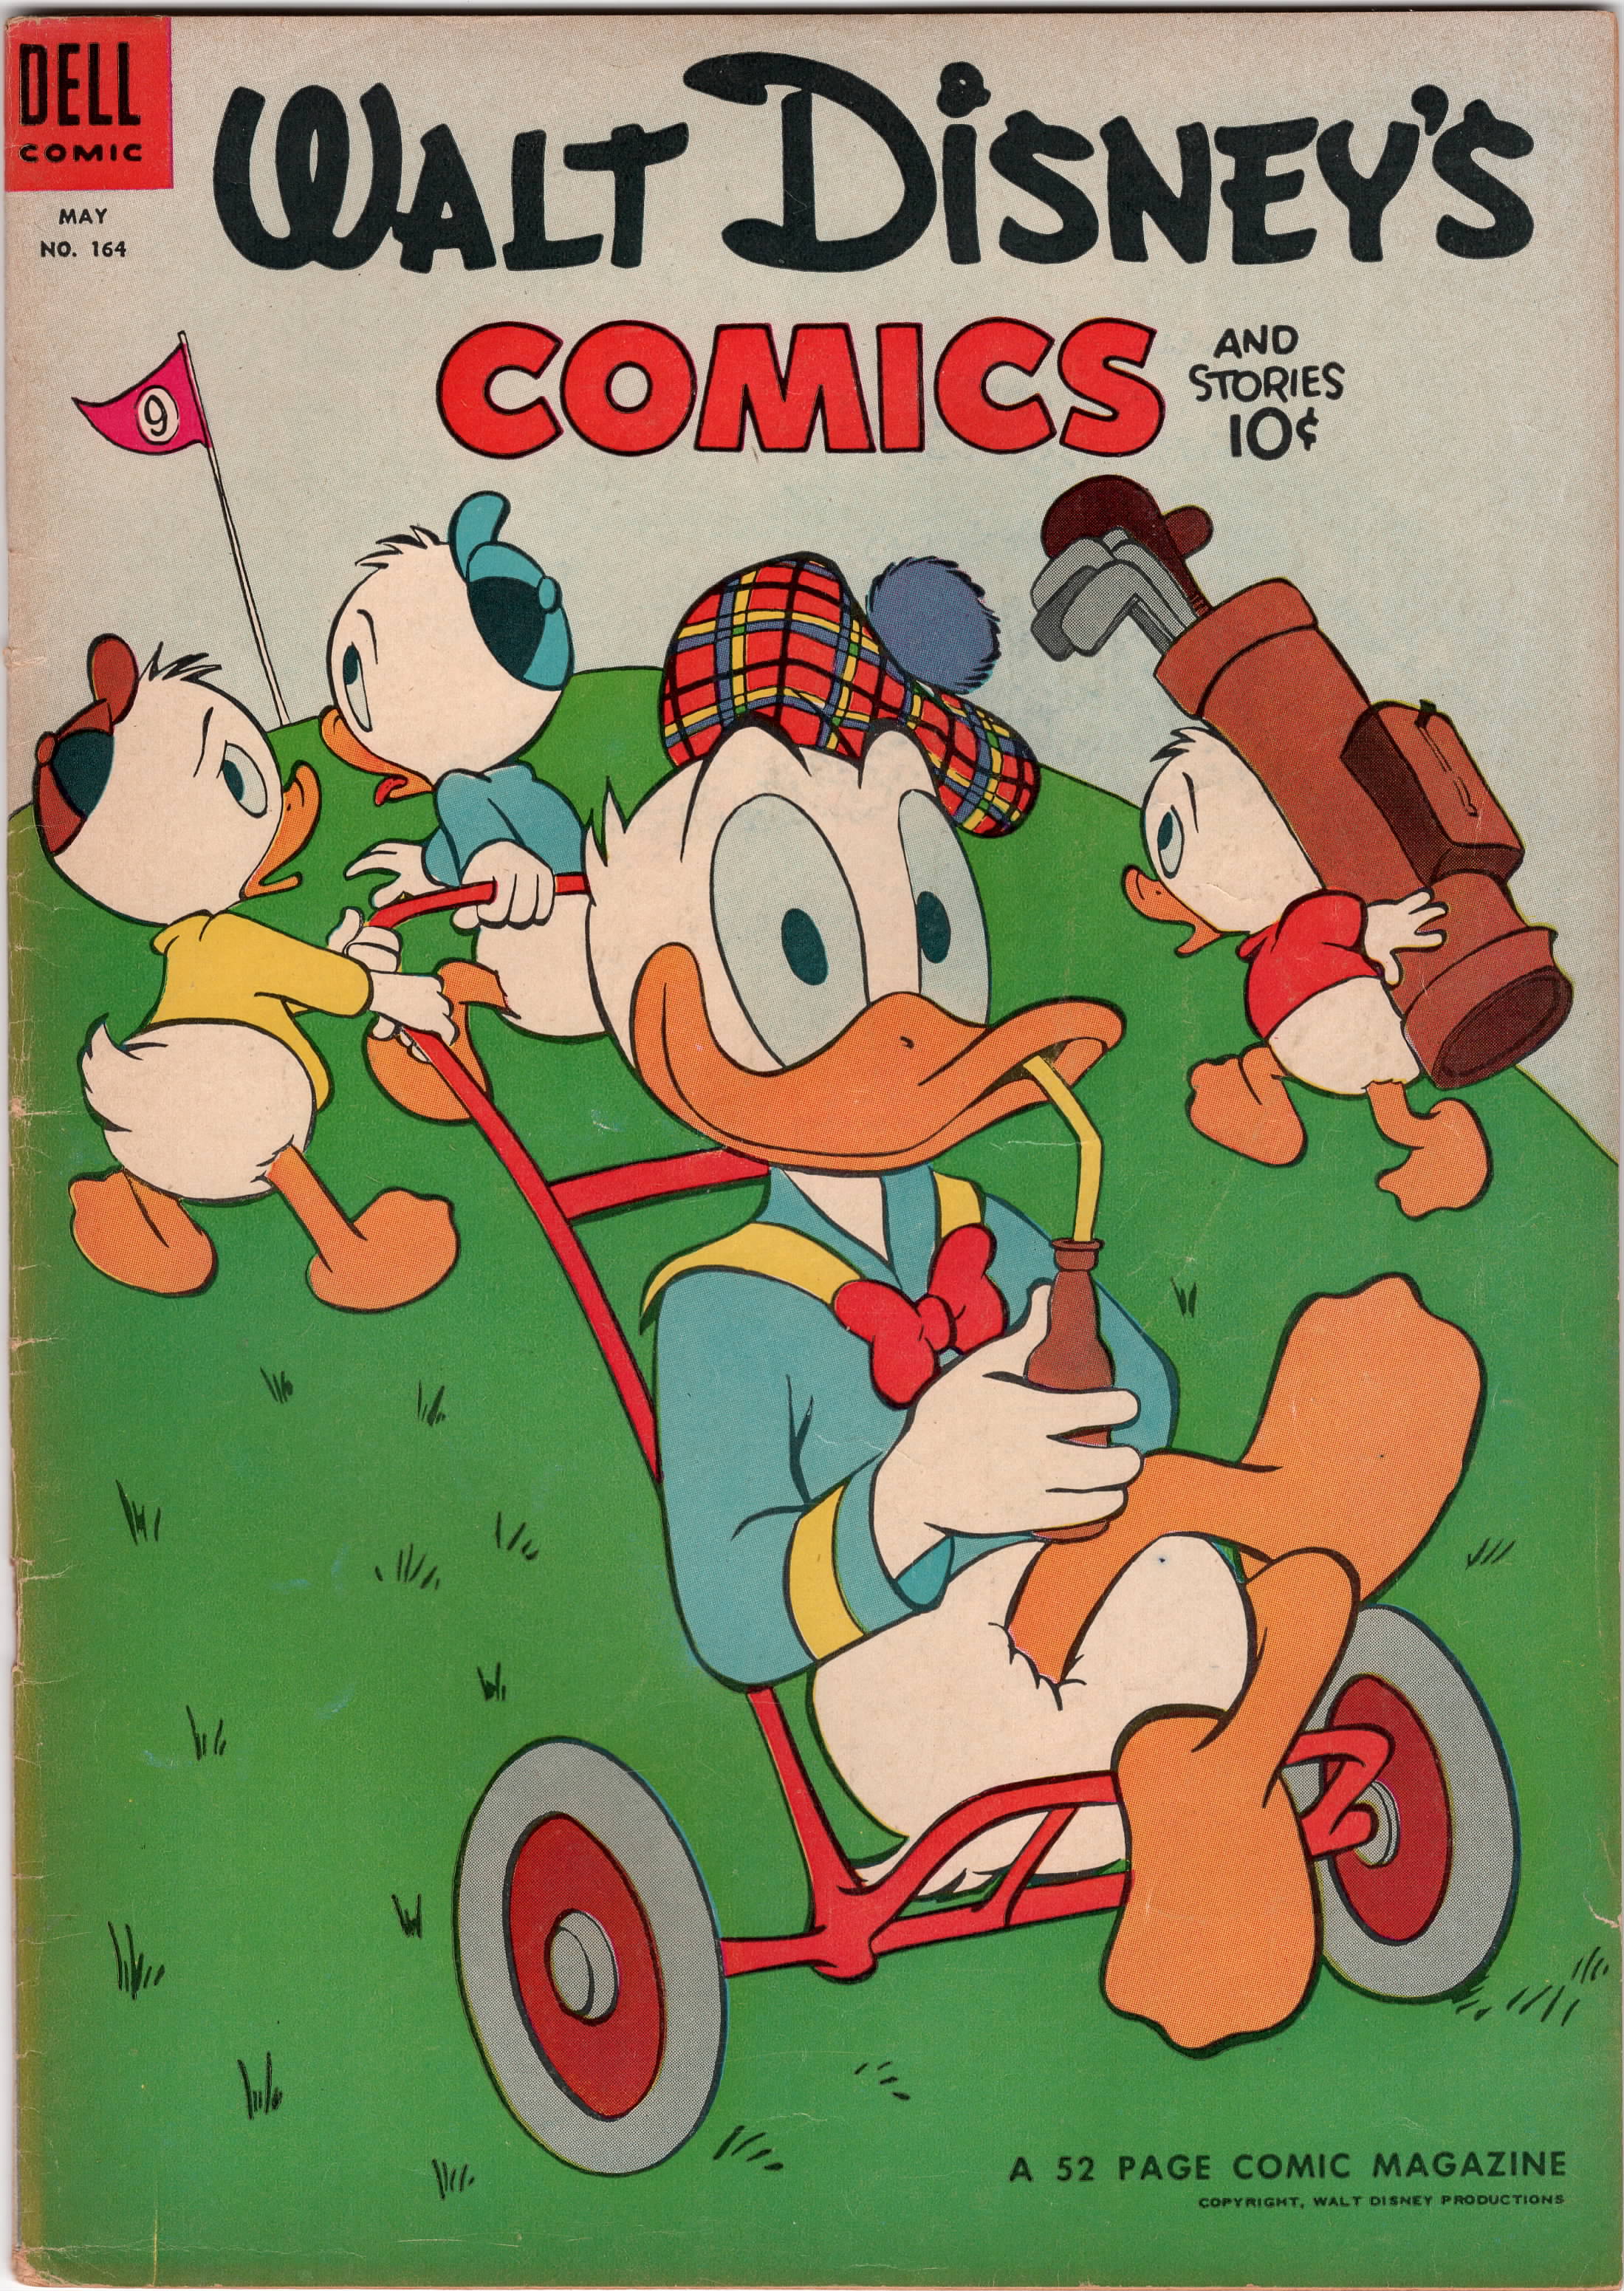 Walt Disney's Comics & Stories #164